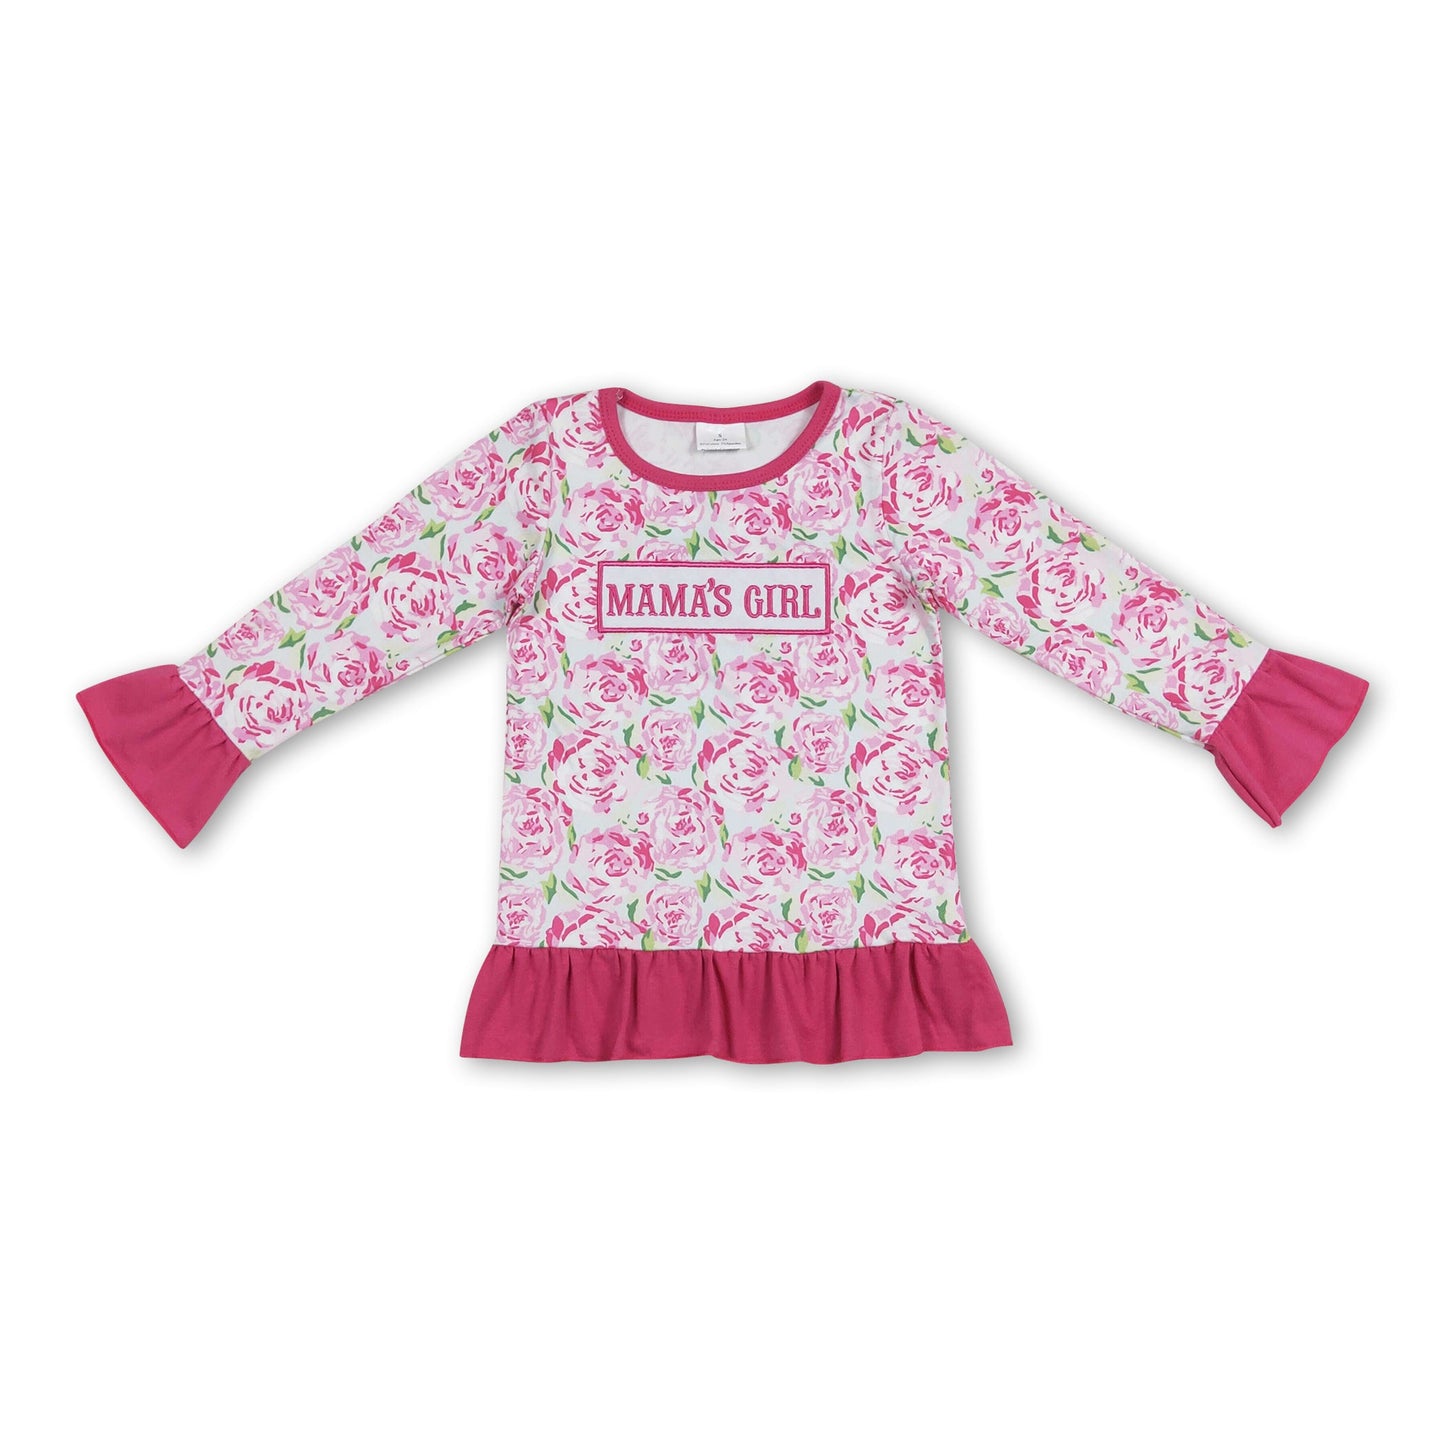 Pink floral Mama's girl ruffle baby kids shirt